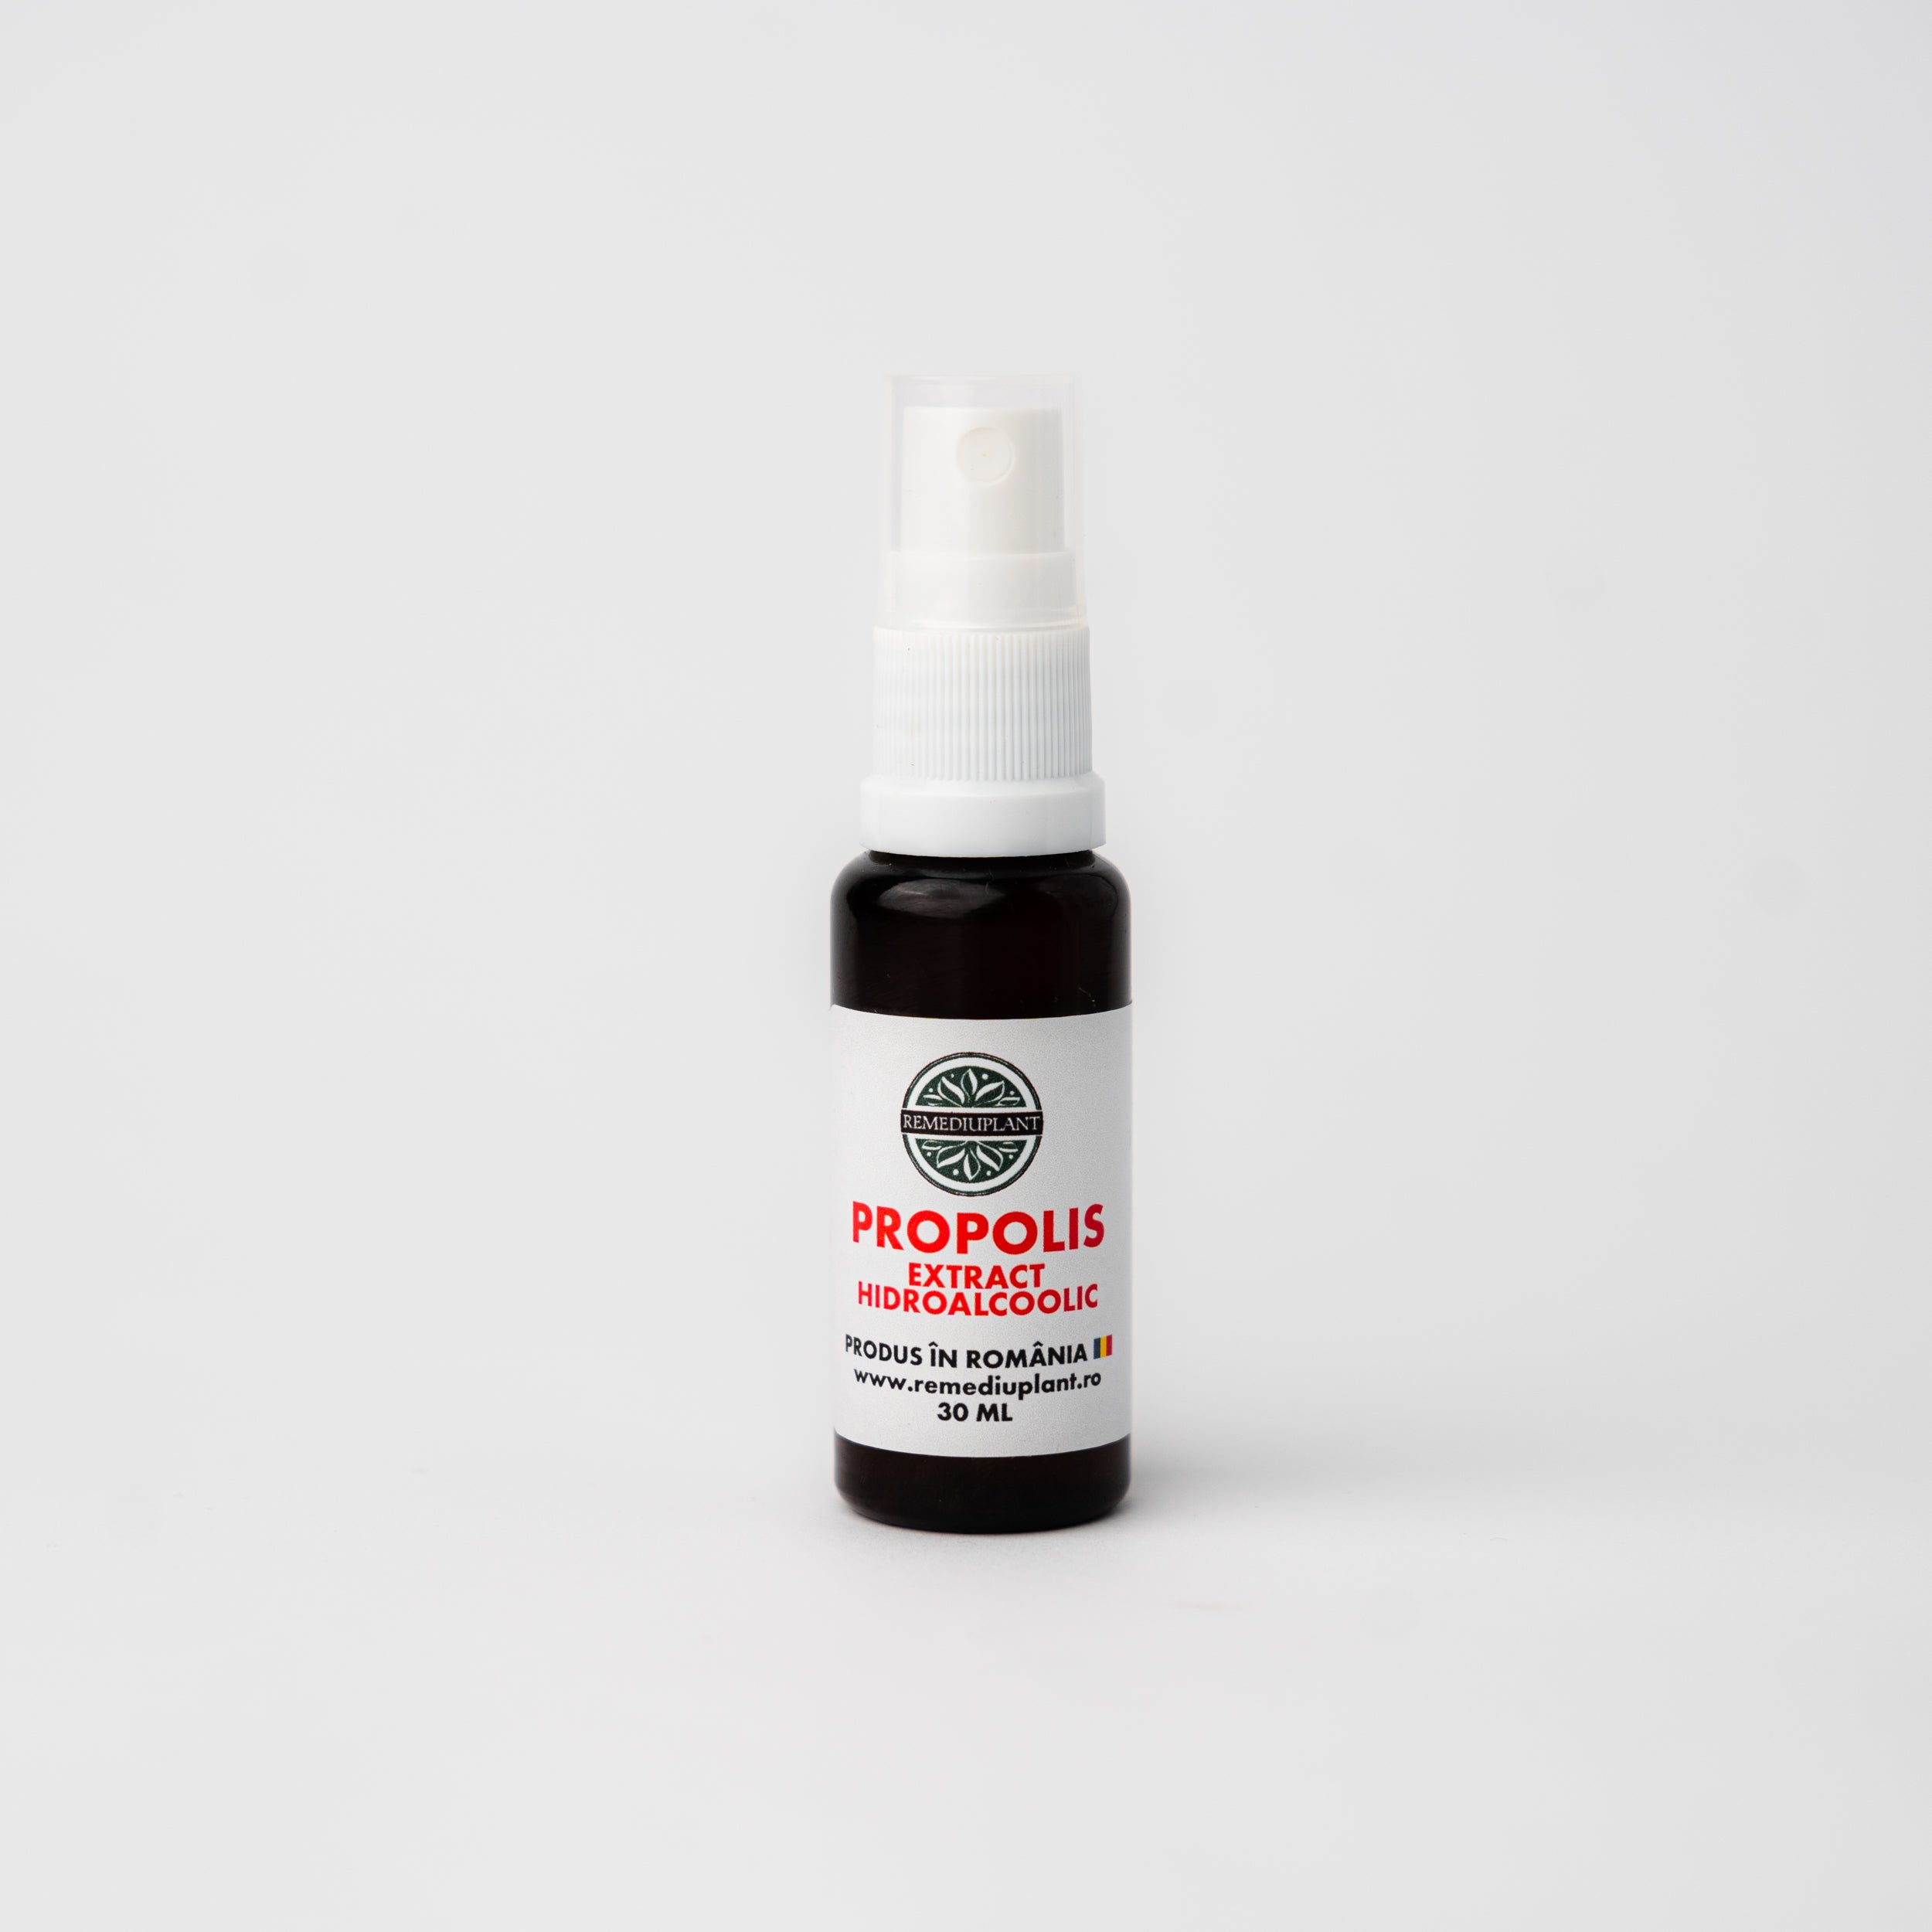 PROPOLIS - Extract Hidroalcoolic 30 ml